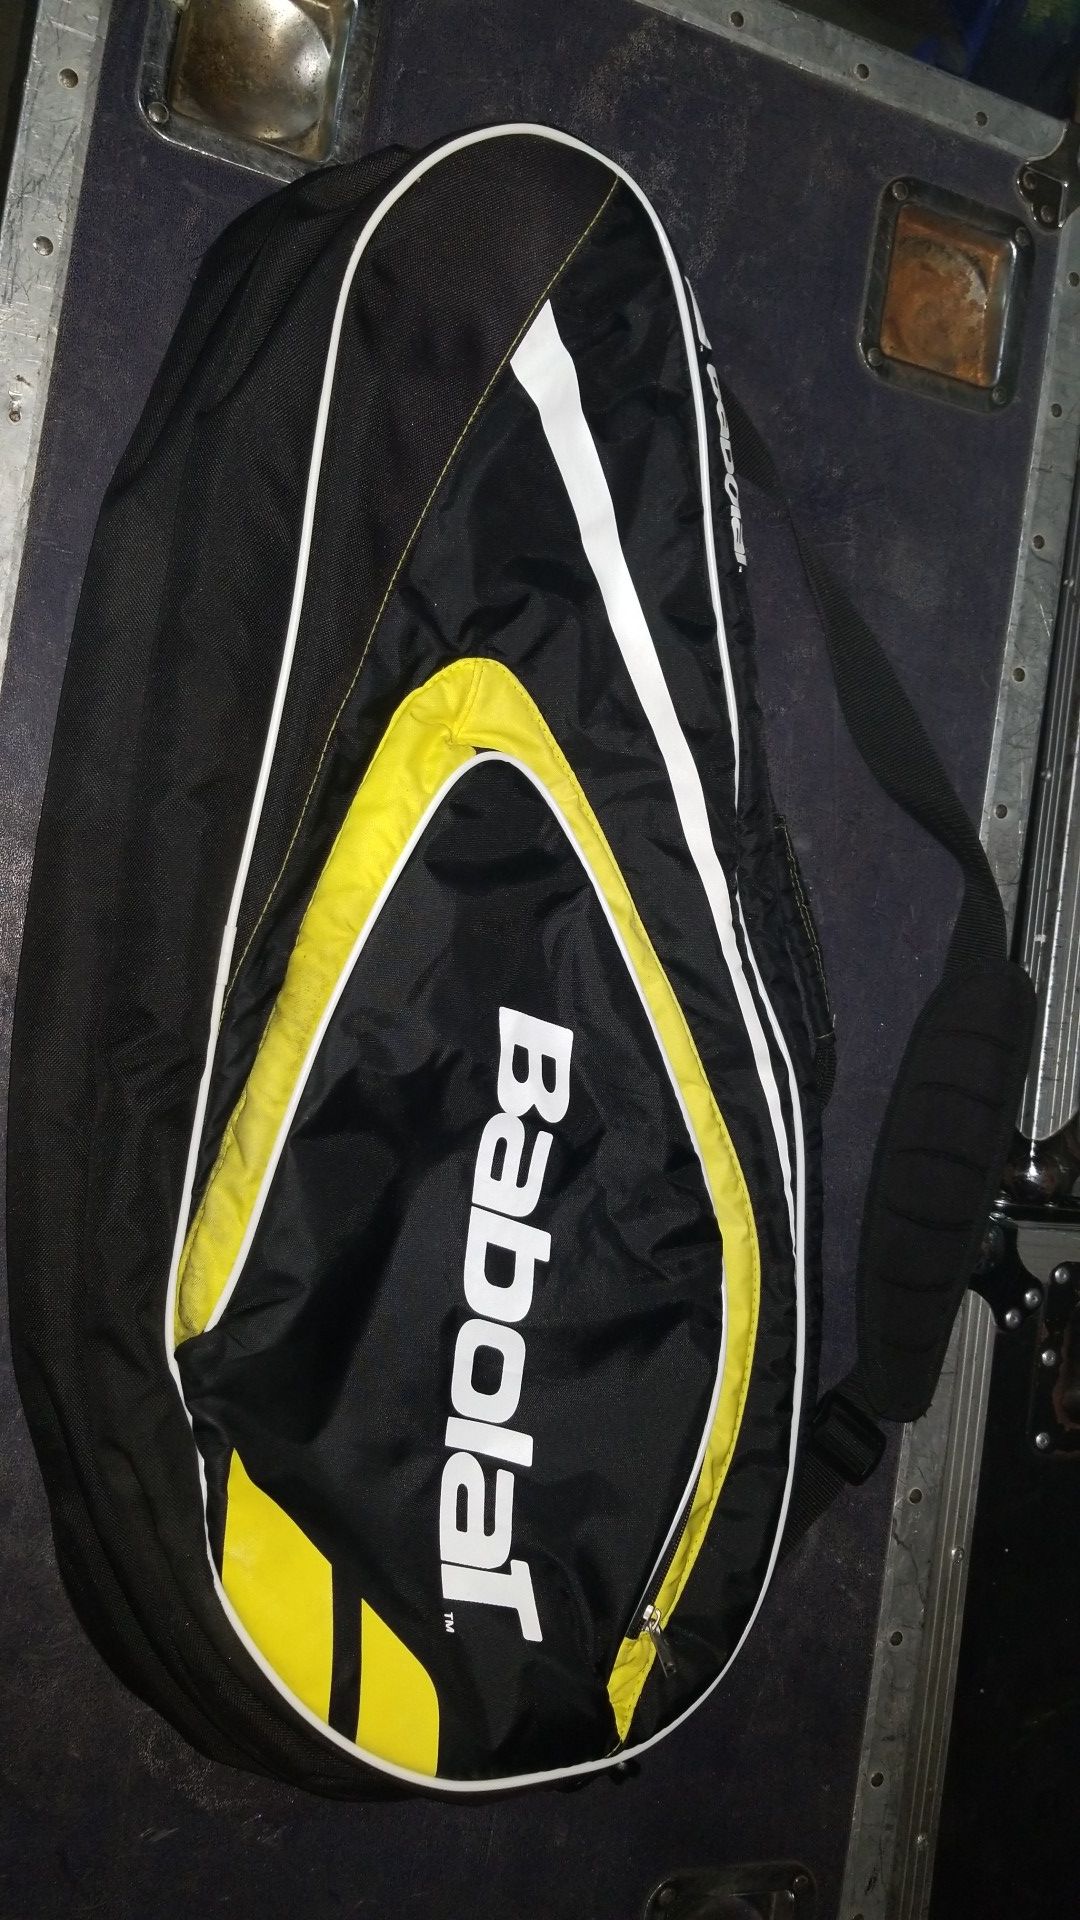 Tennis racket bag